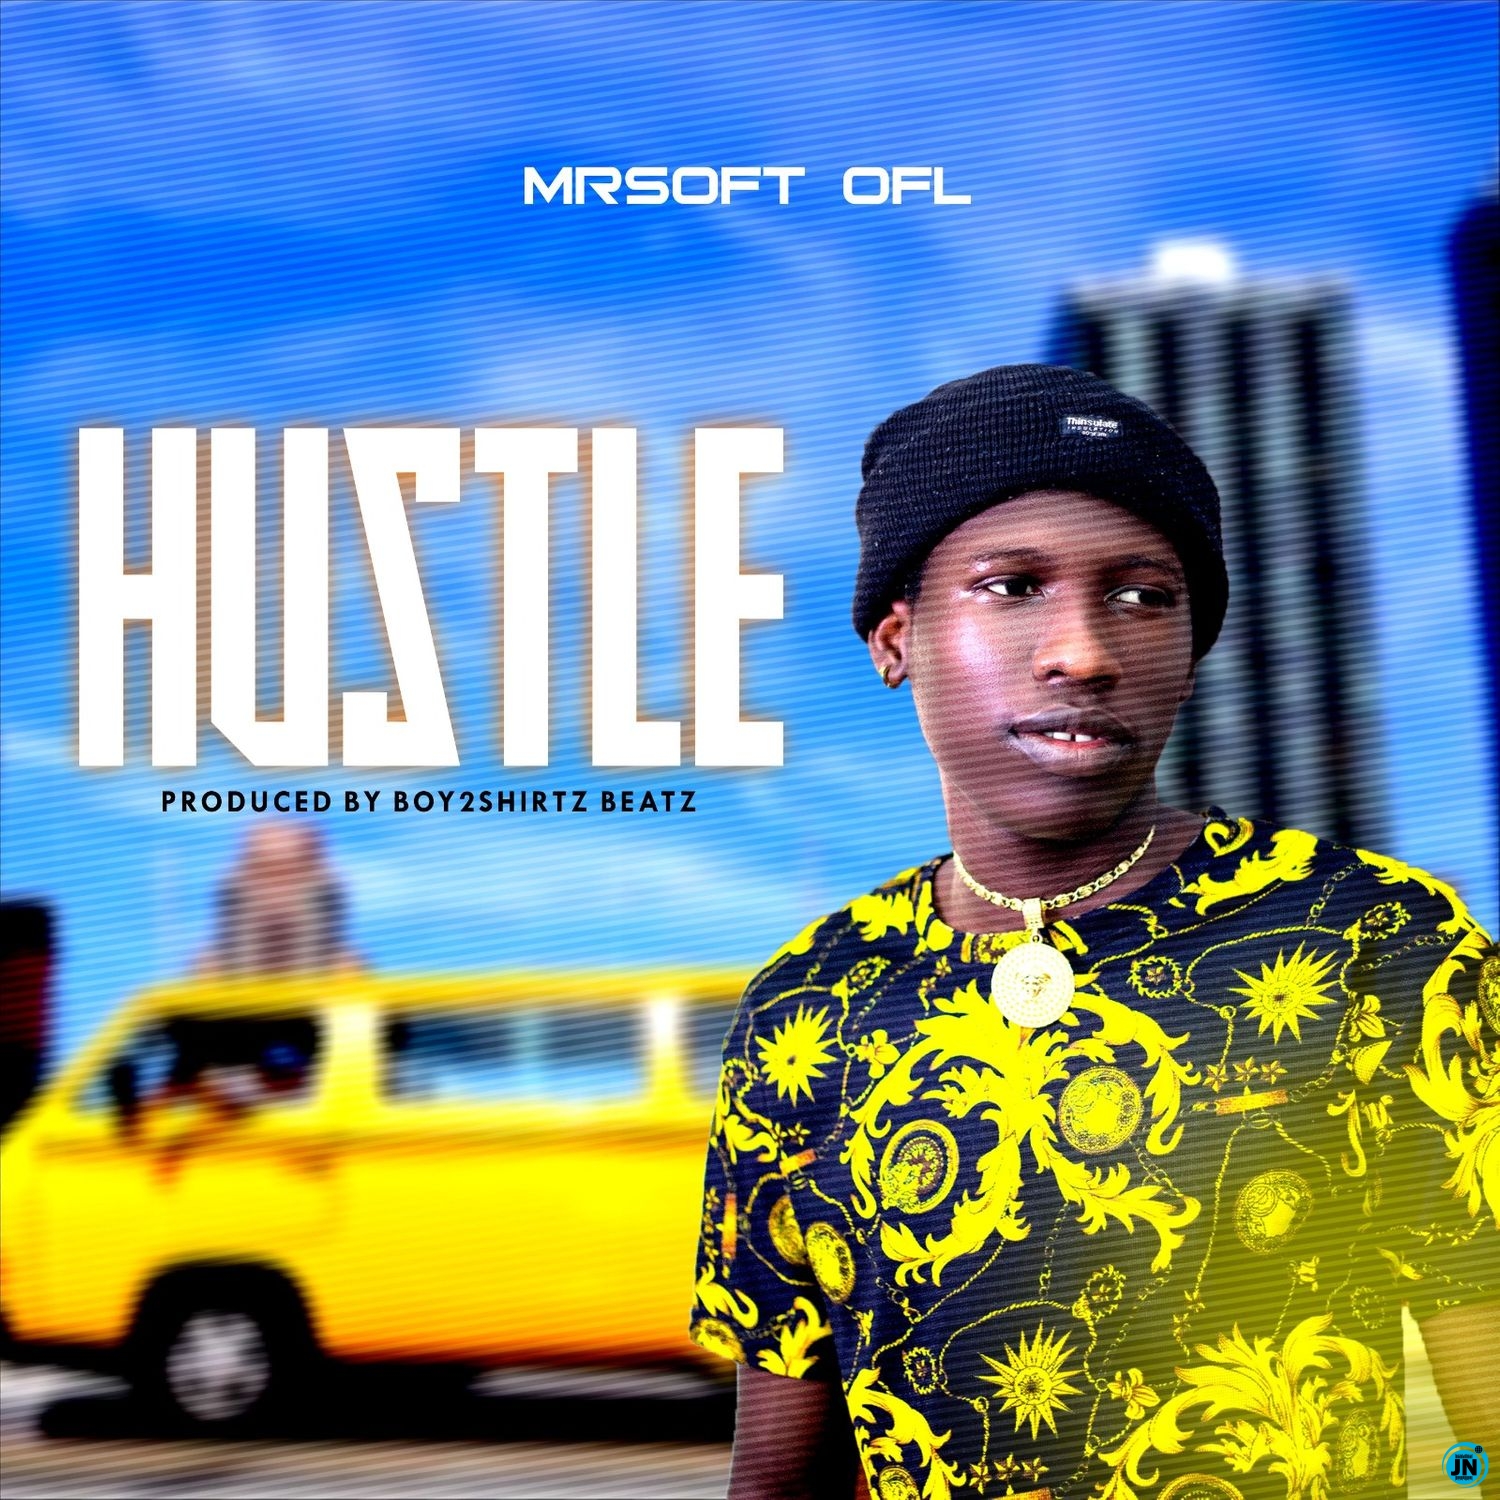 Mrsoft Ofl - Hustle   Mp3 Download lyrics